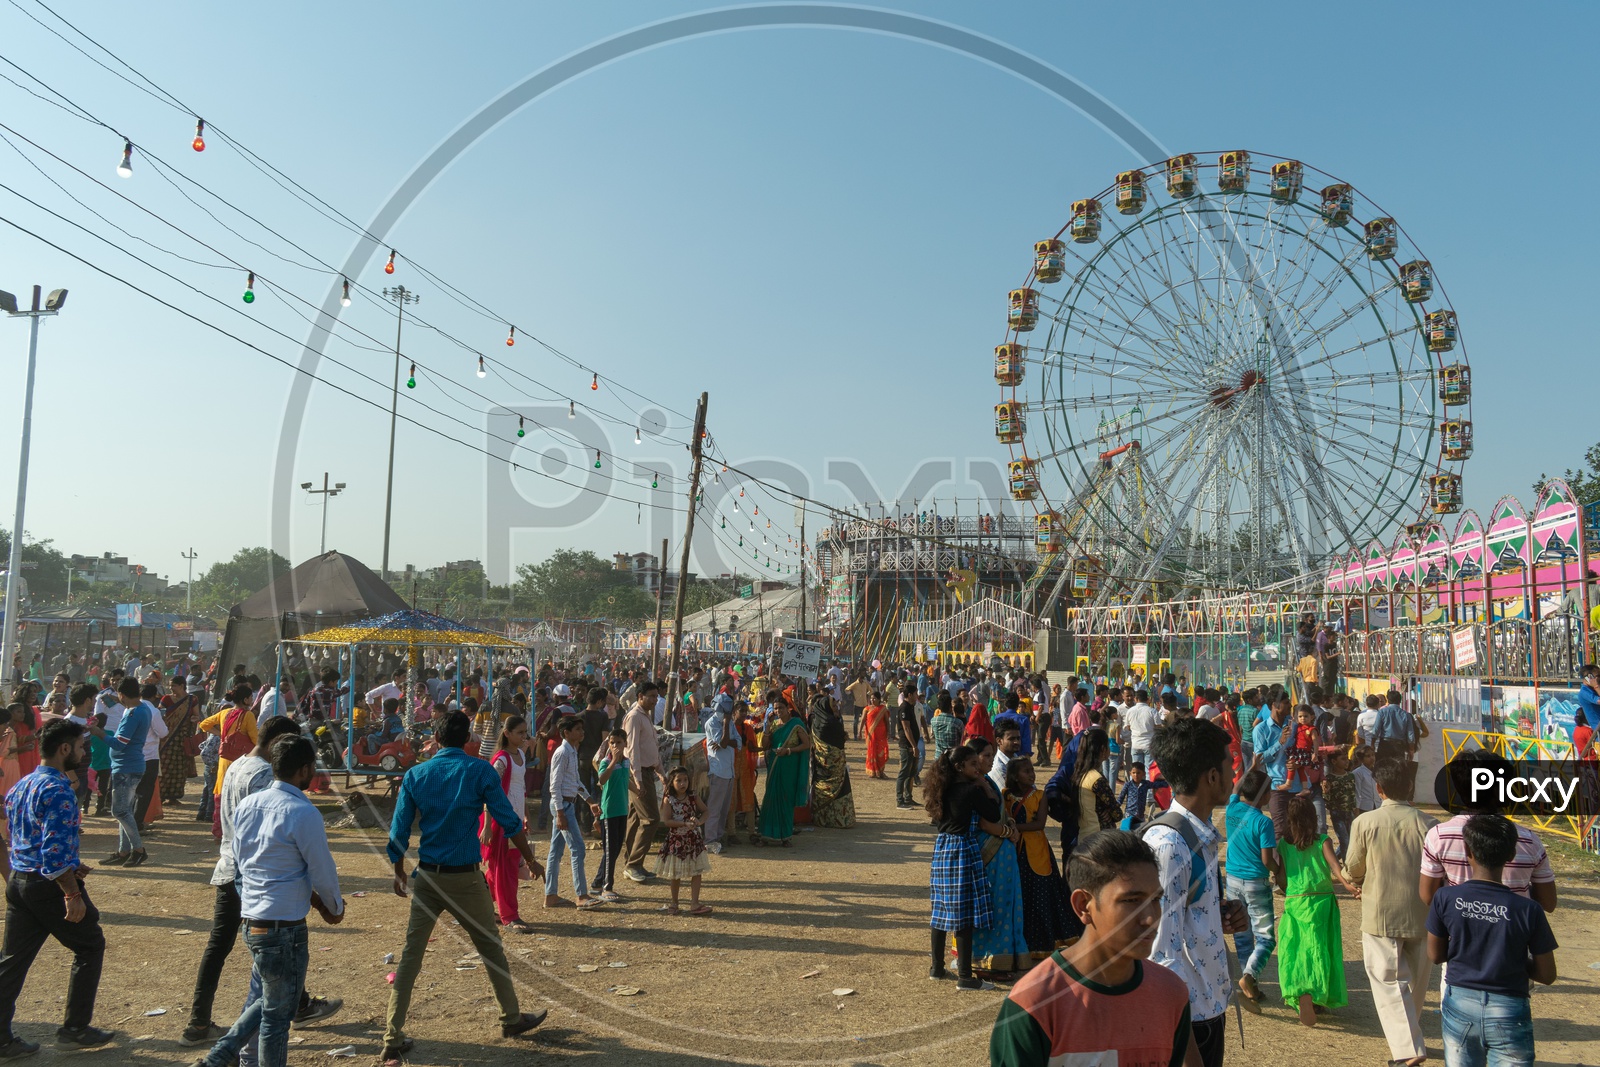 Ferris wheel during fair on Dusshera(Vijayadashami,Dashehra, Dasara) and people enjoying themselves at the fair